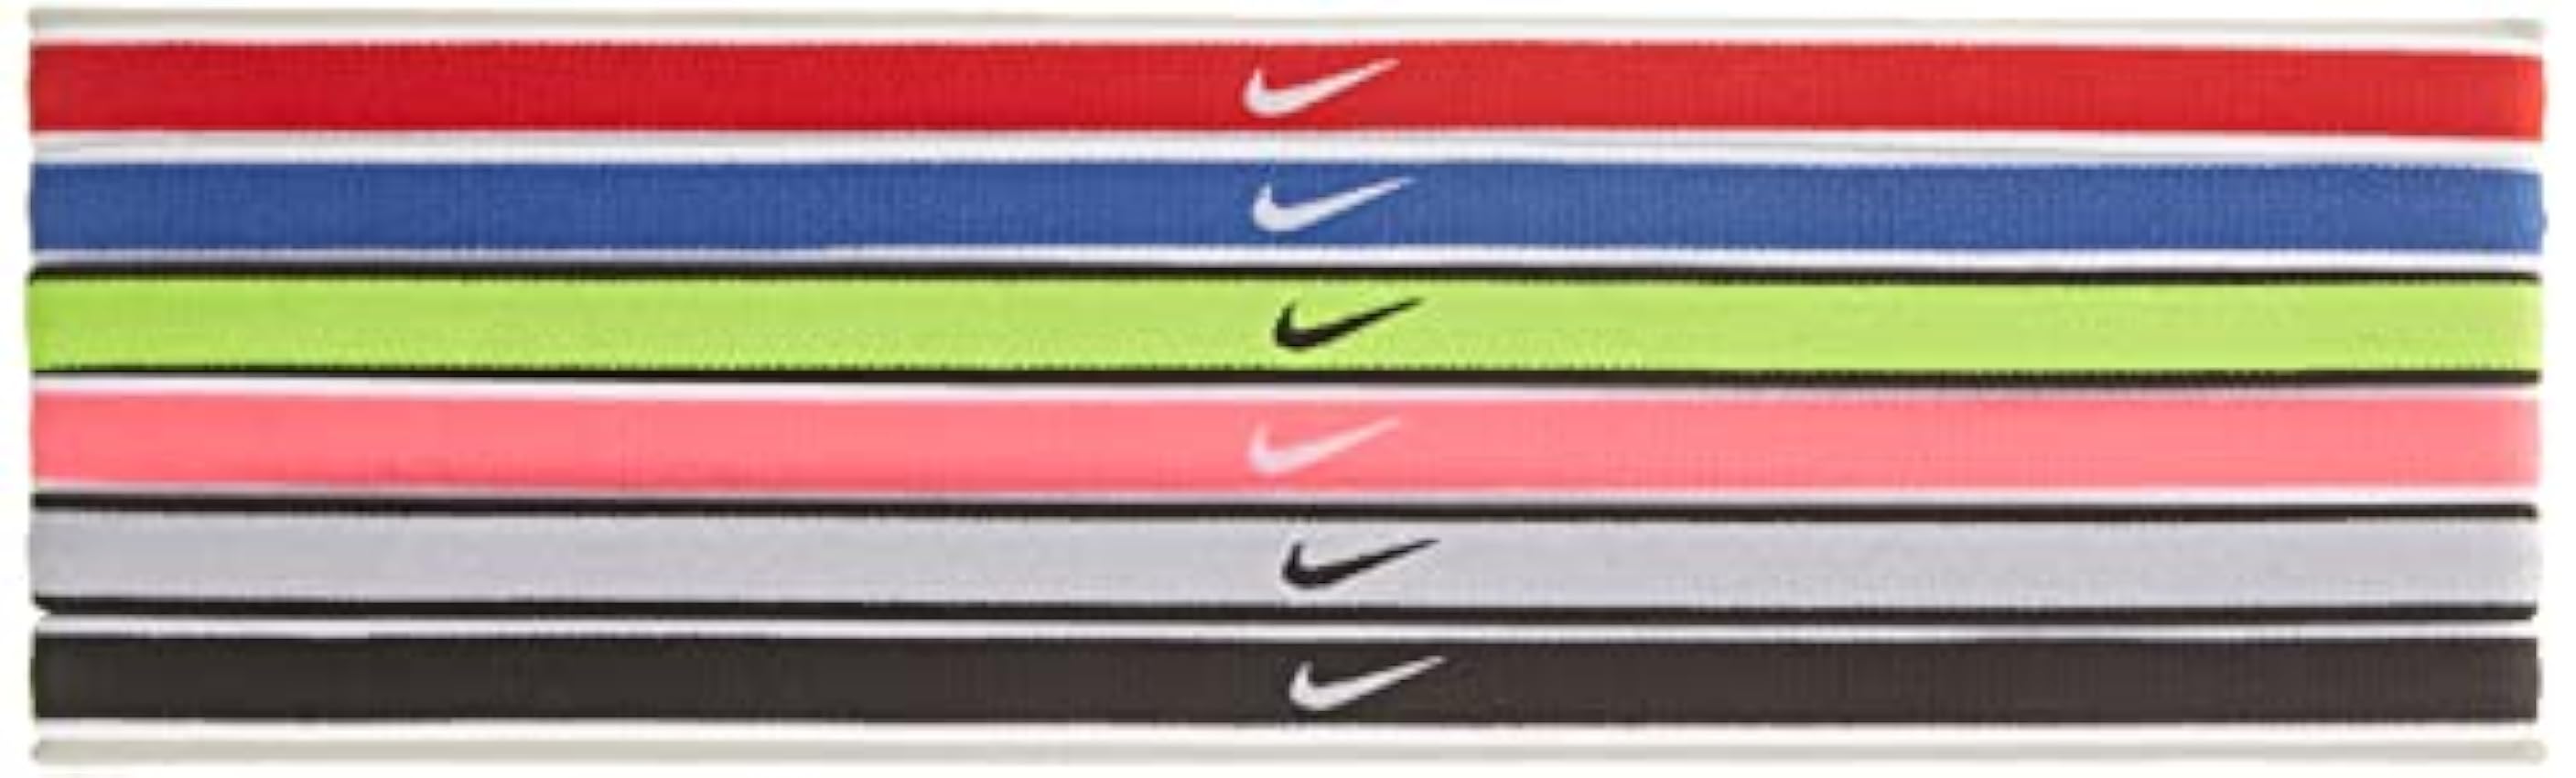 Nike Swoosh - Juego de 6 Diademas para Mujer 2vx6KVL2